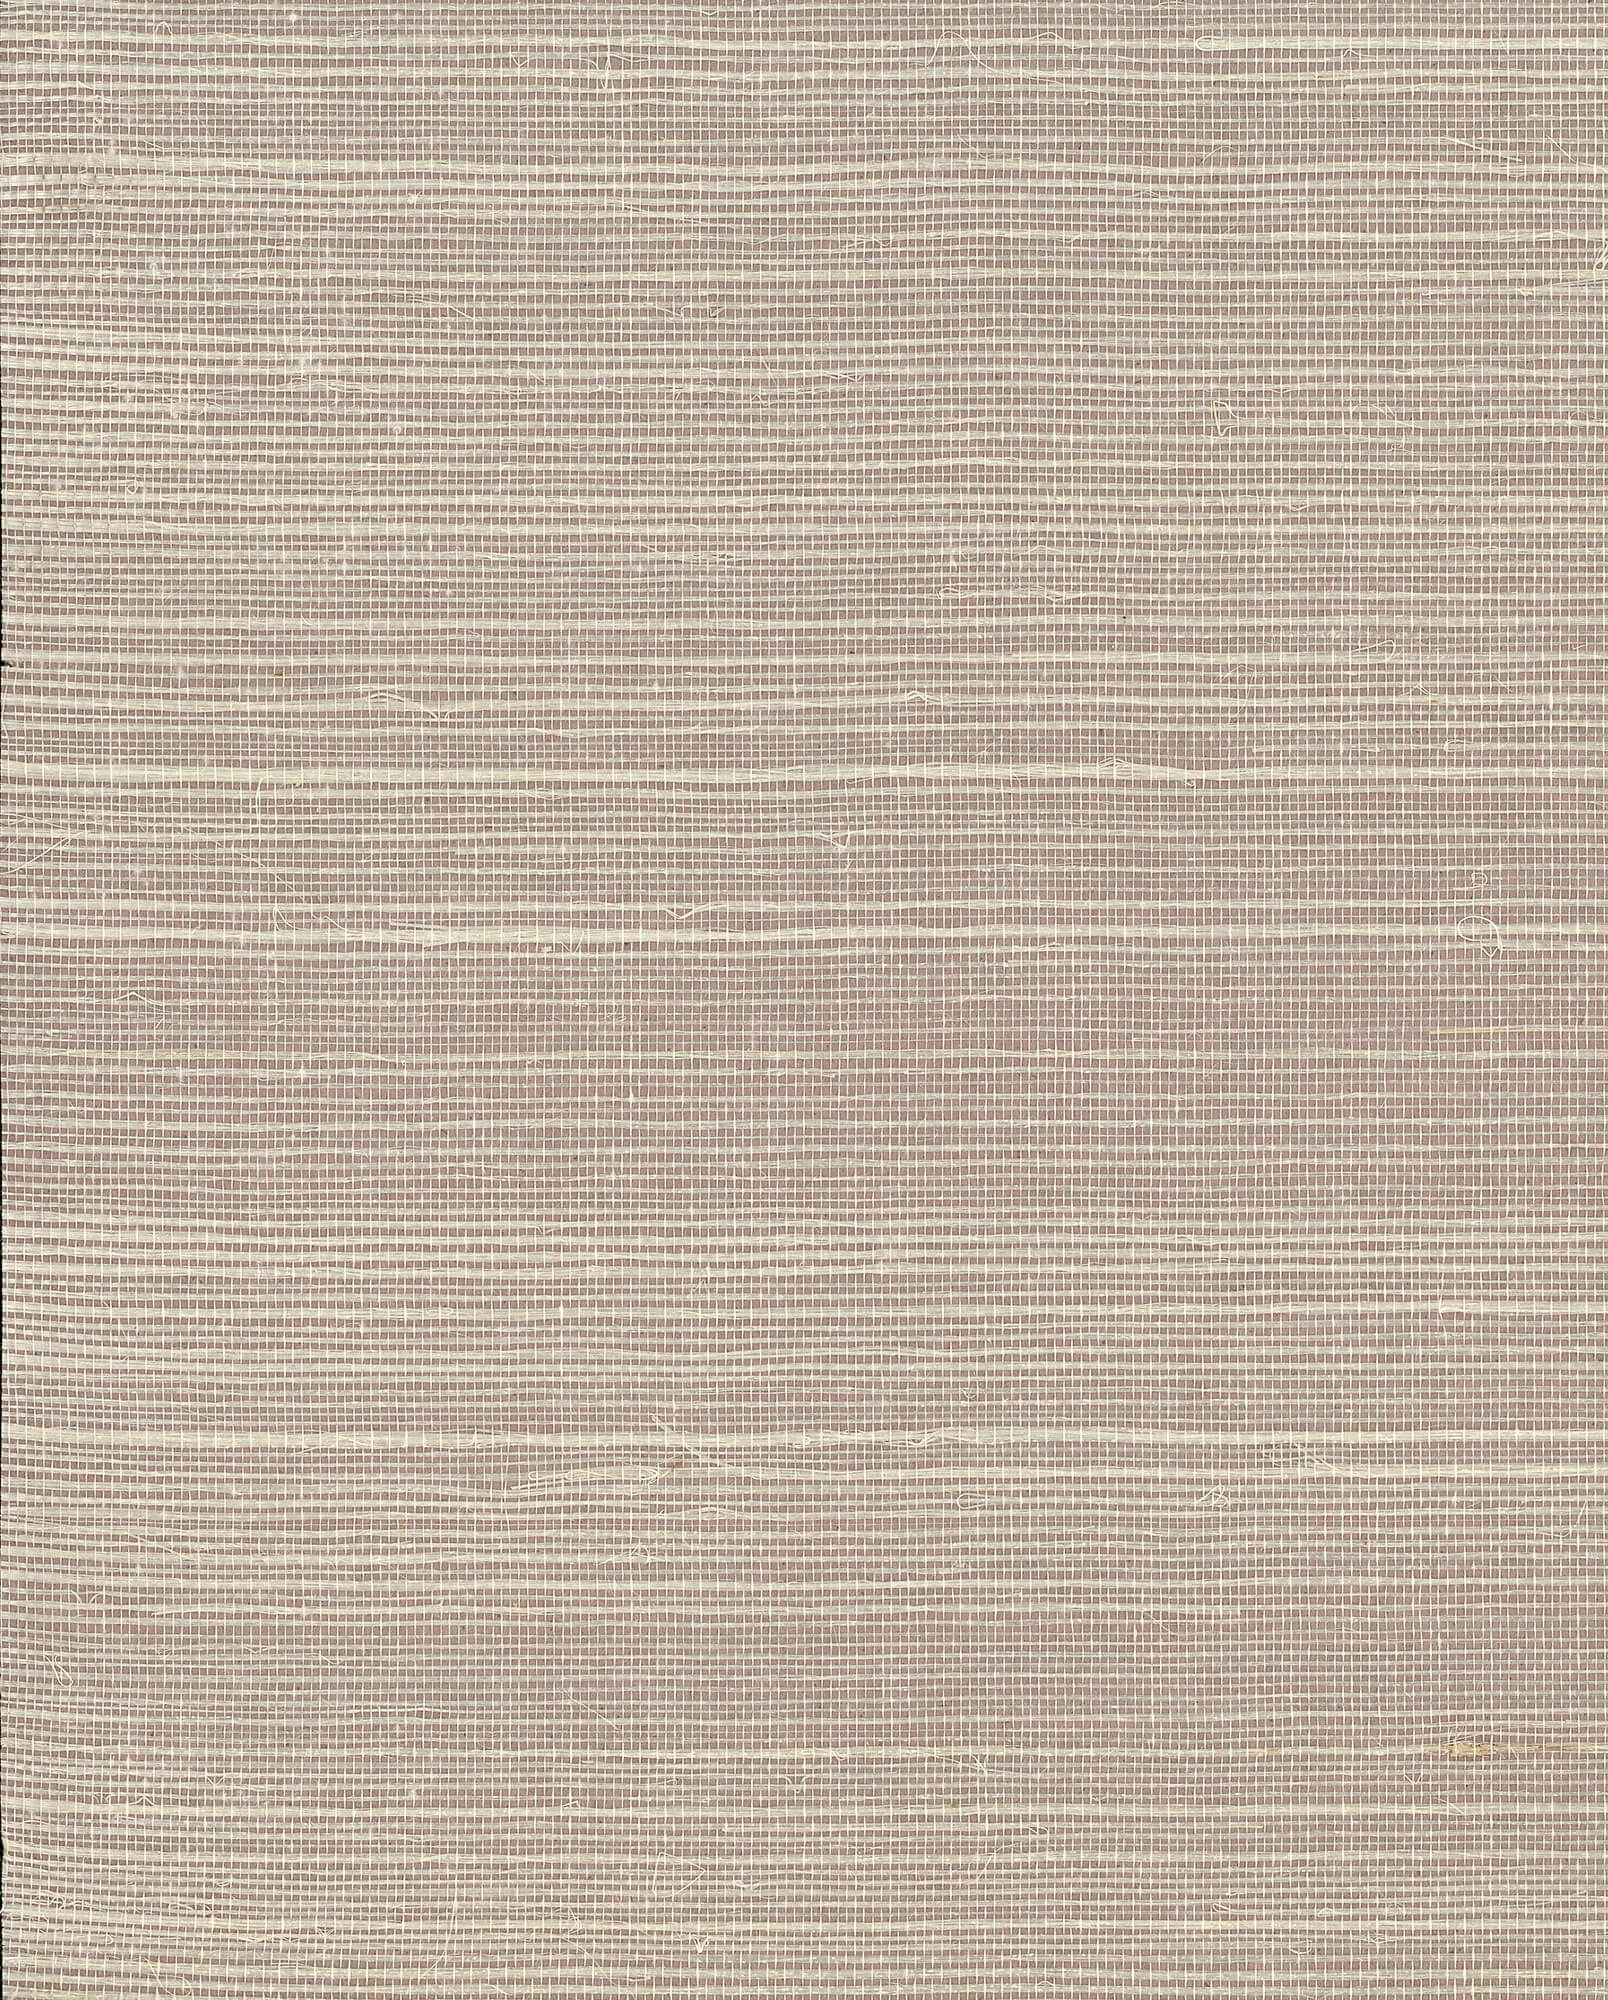 VG4406MH Magnolia Home Plain Grass Wallpaper Gray Beige